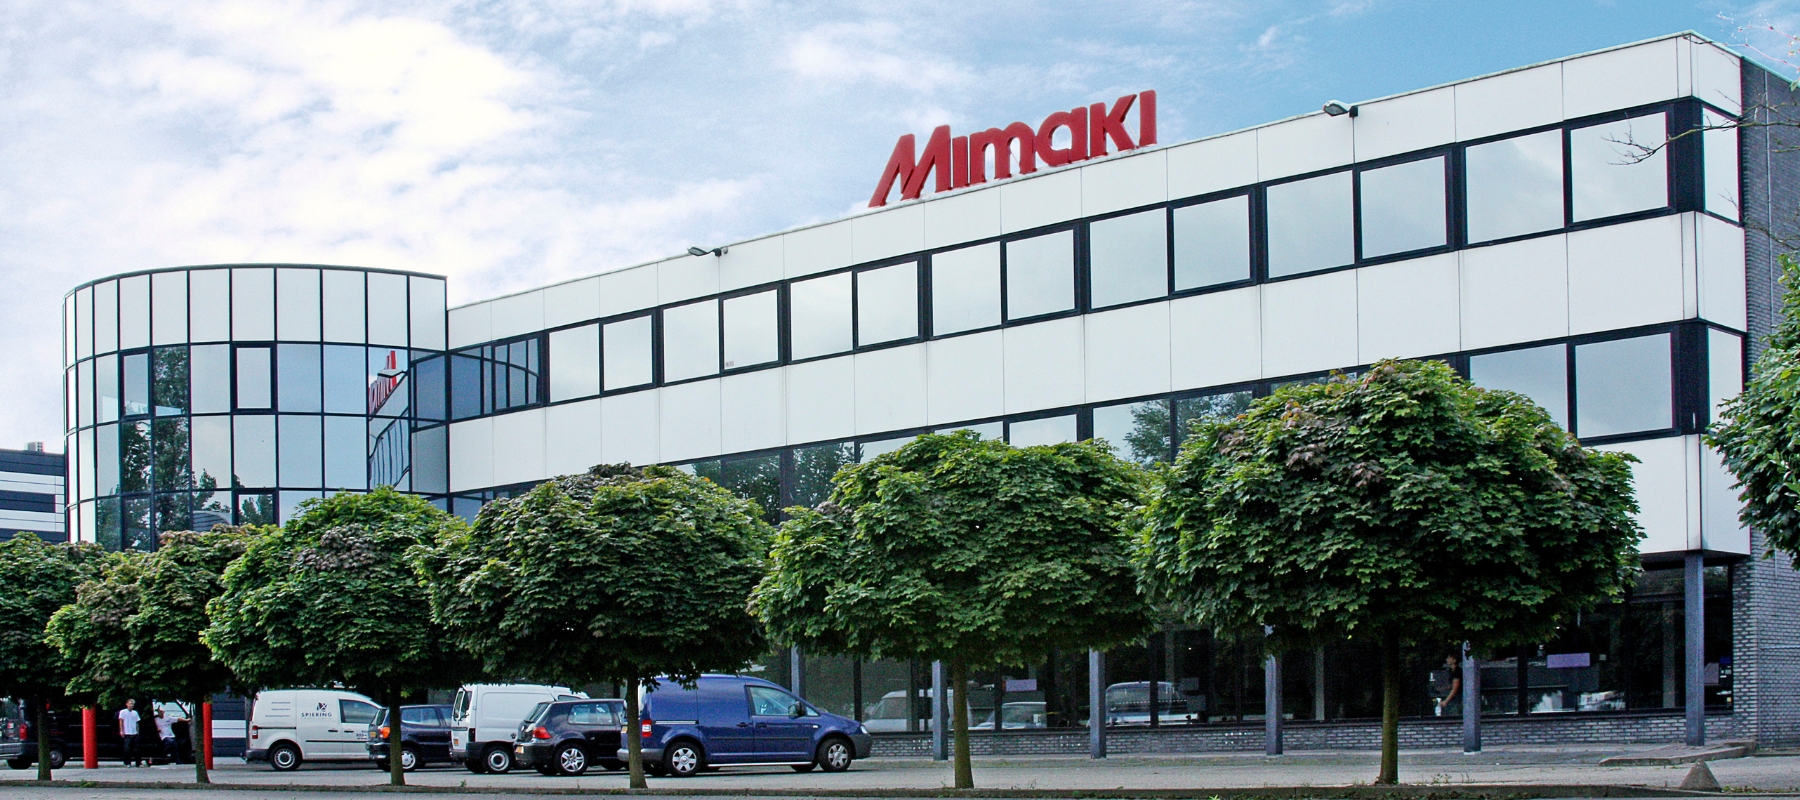 Mimaki EMEA Headquarters